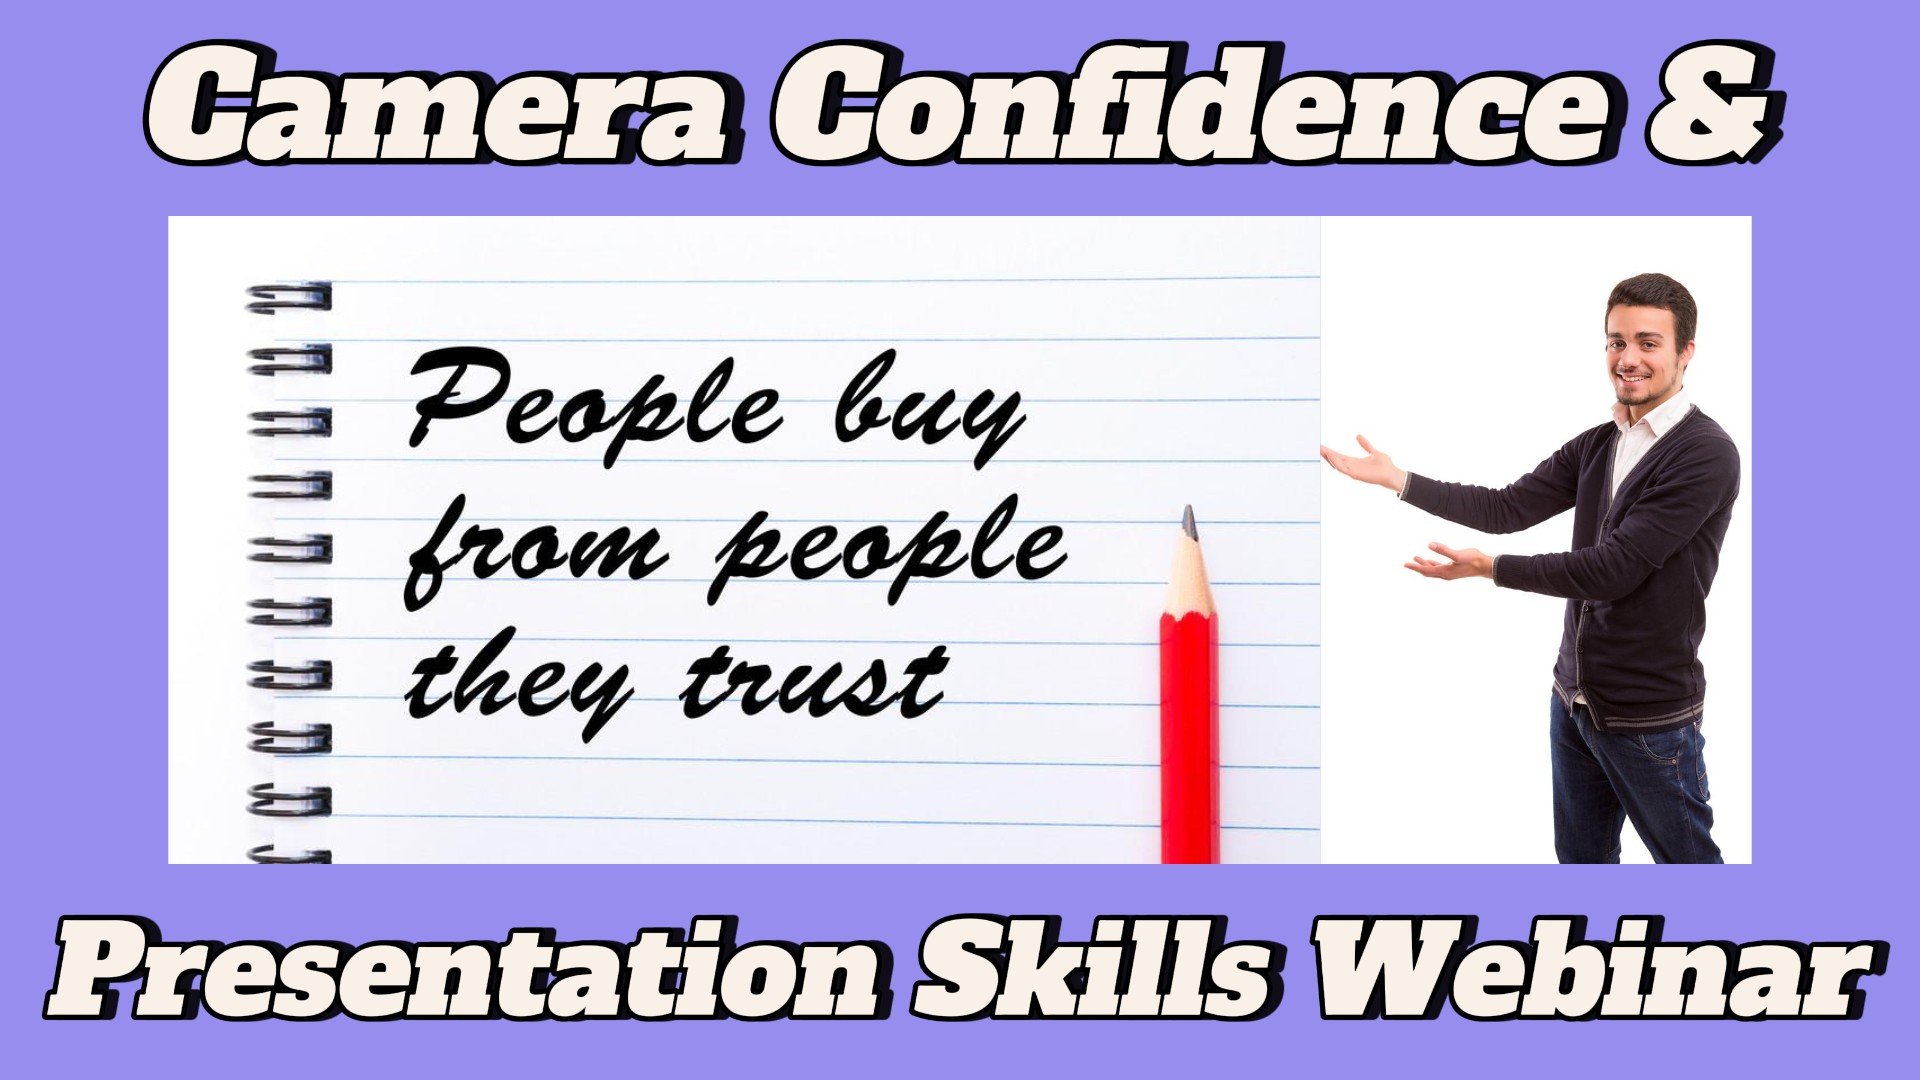 Camera Confidence & Presentation Skills Webinar - FREE